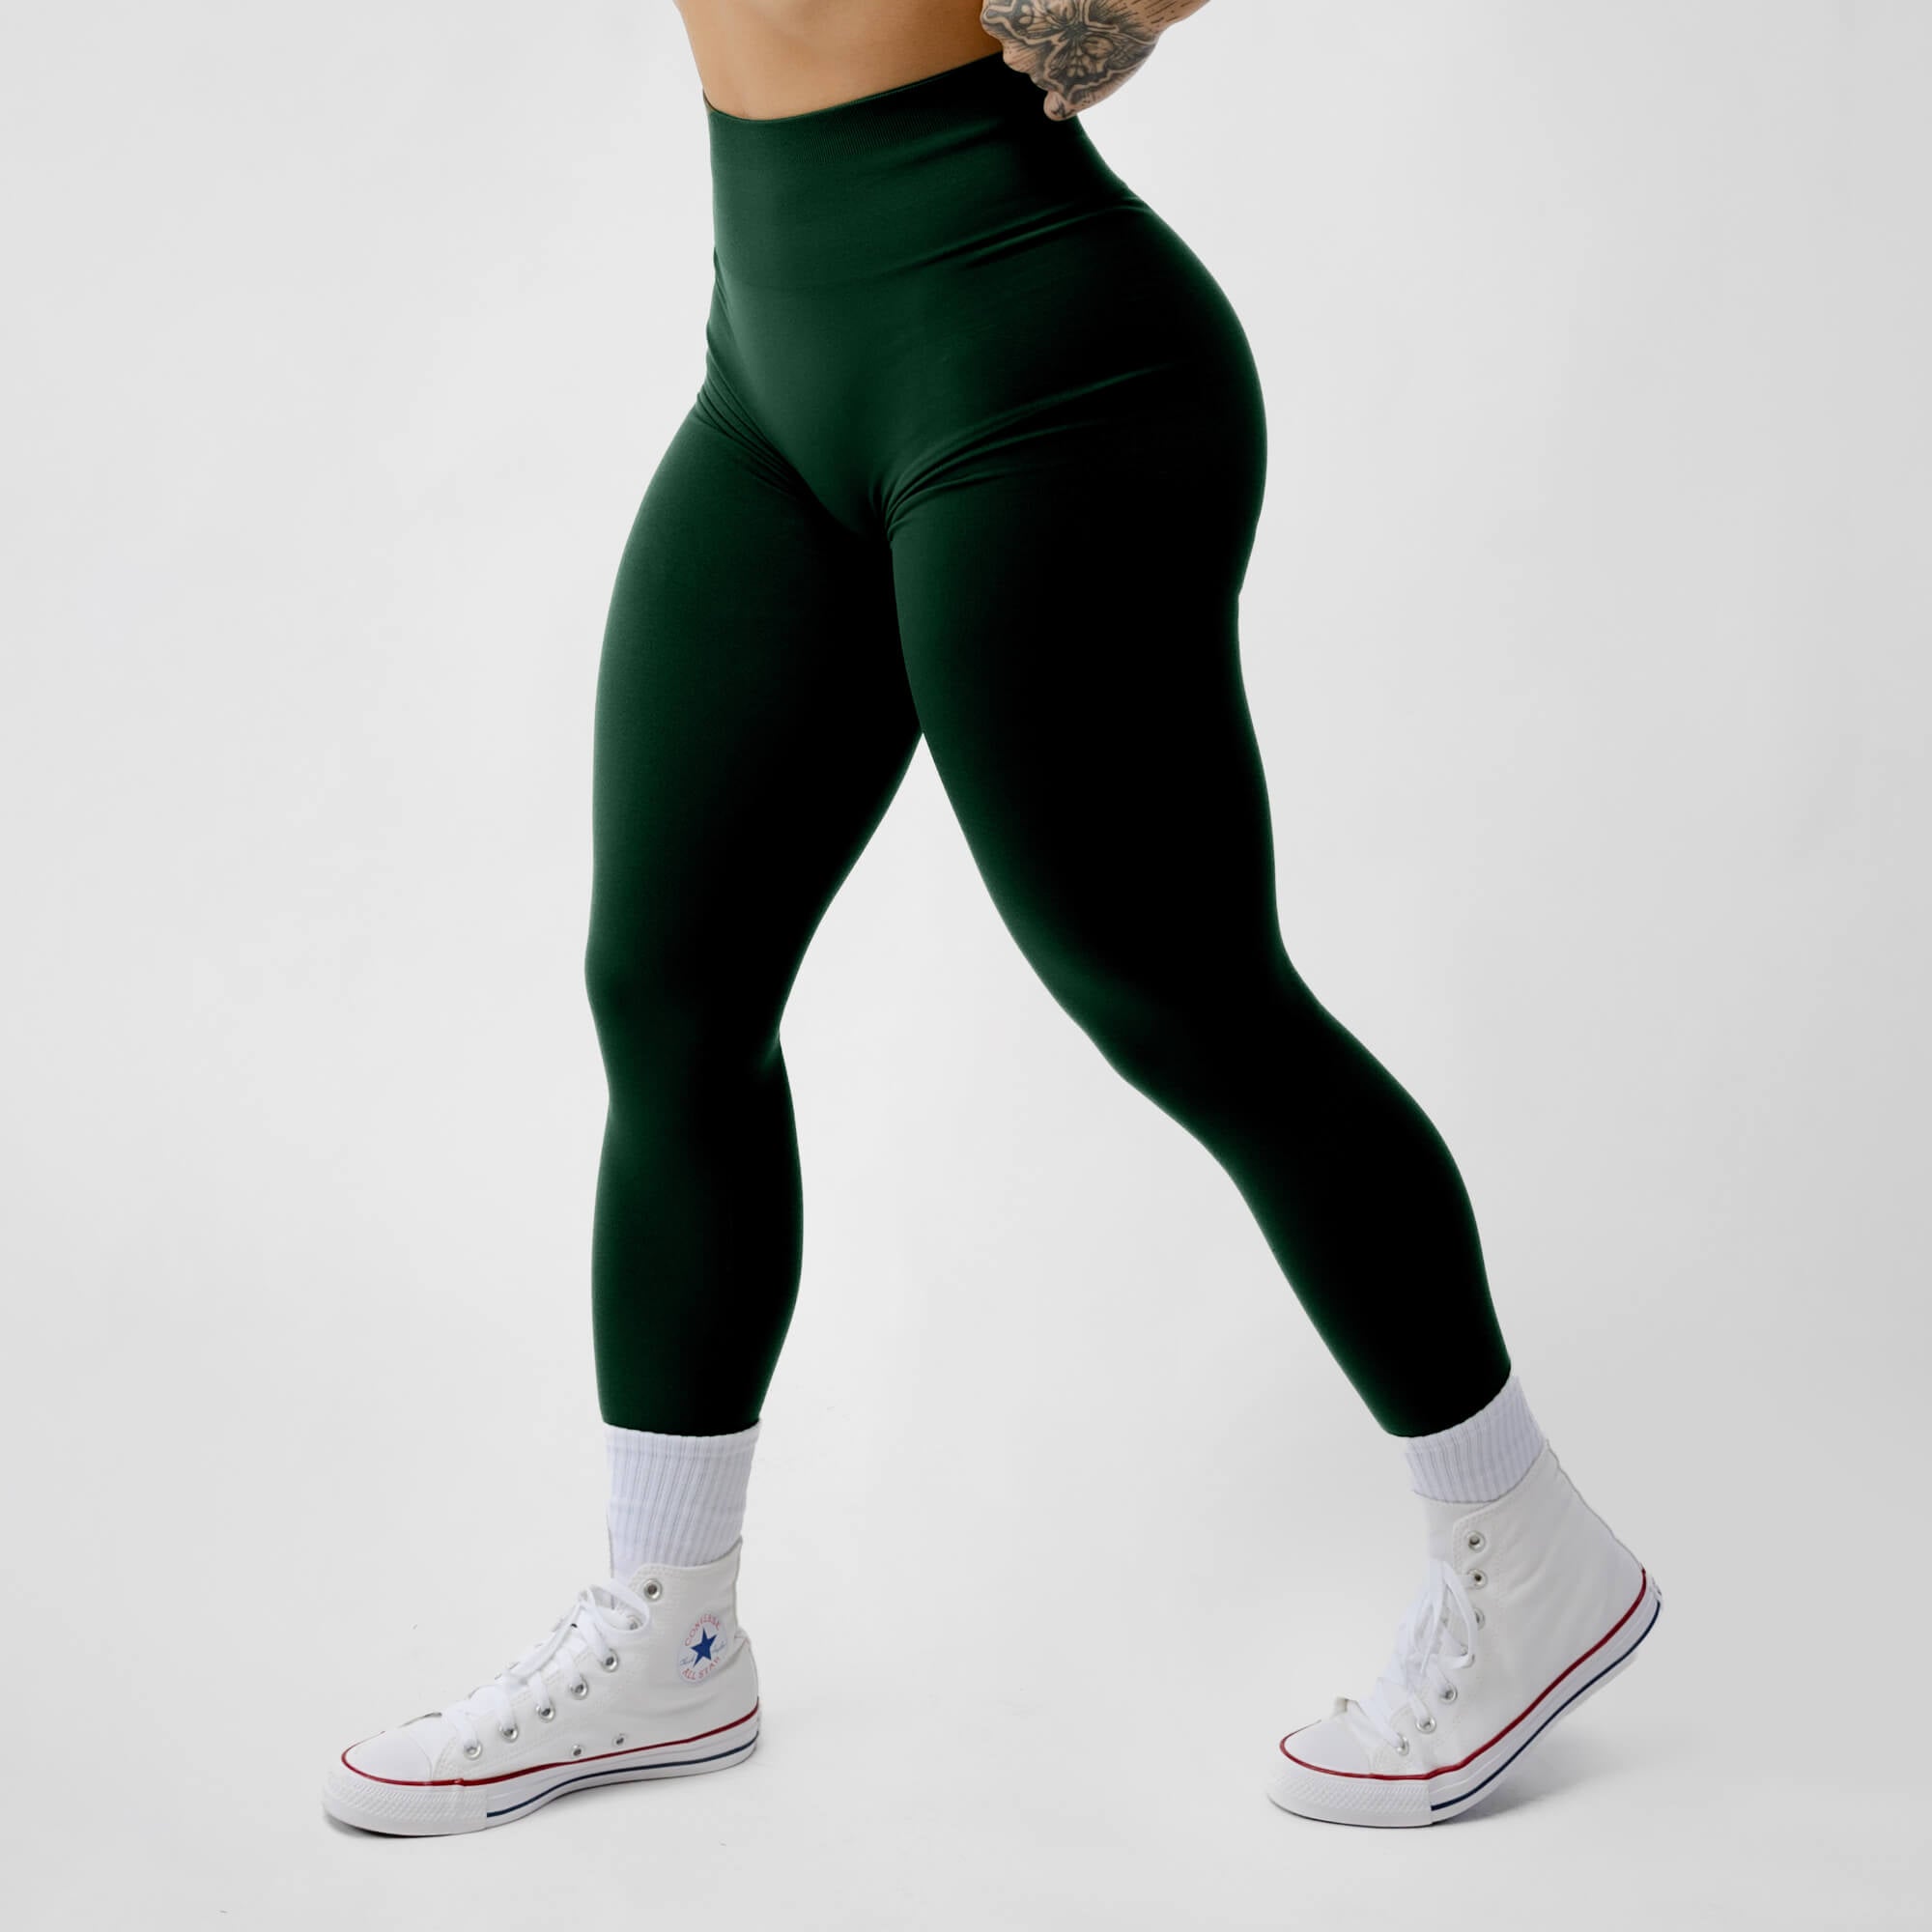 Esther leggings white camo – grindhouseathletics